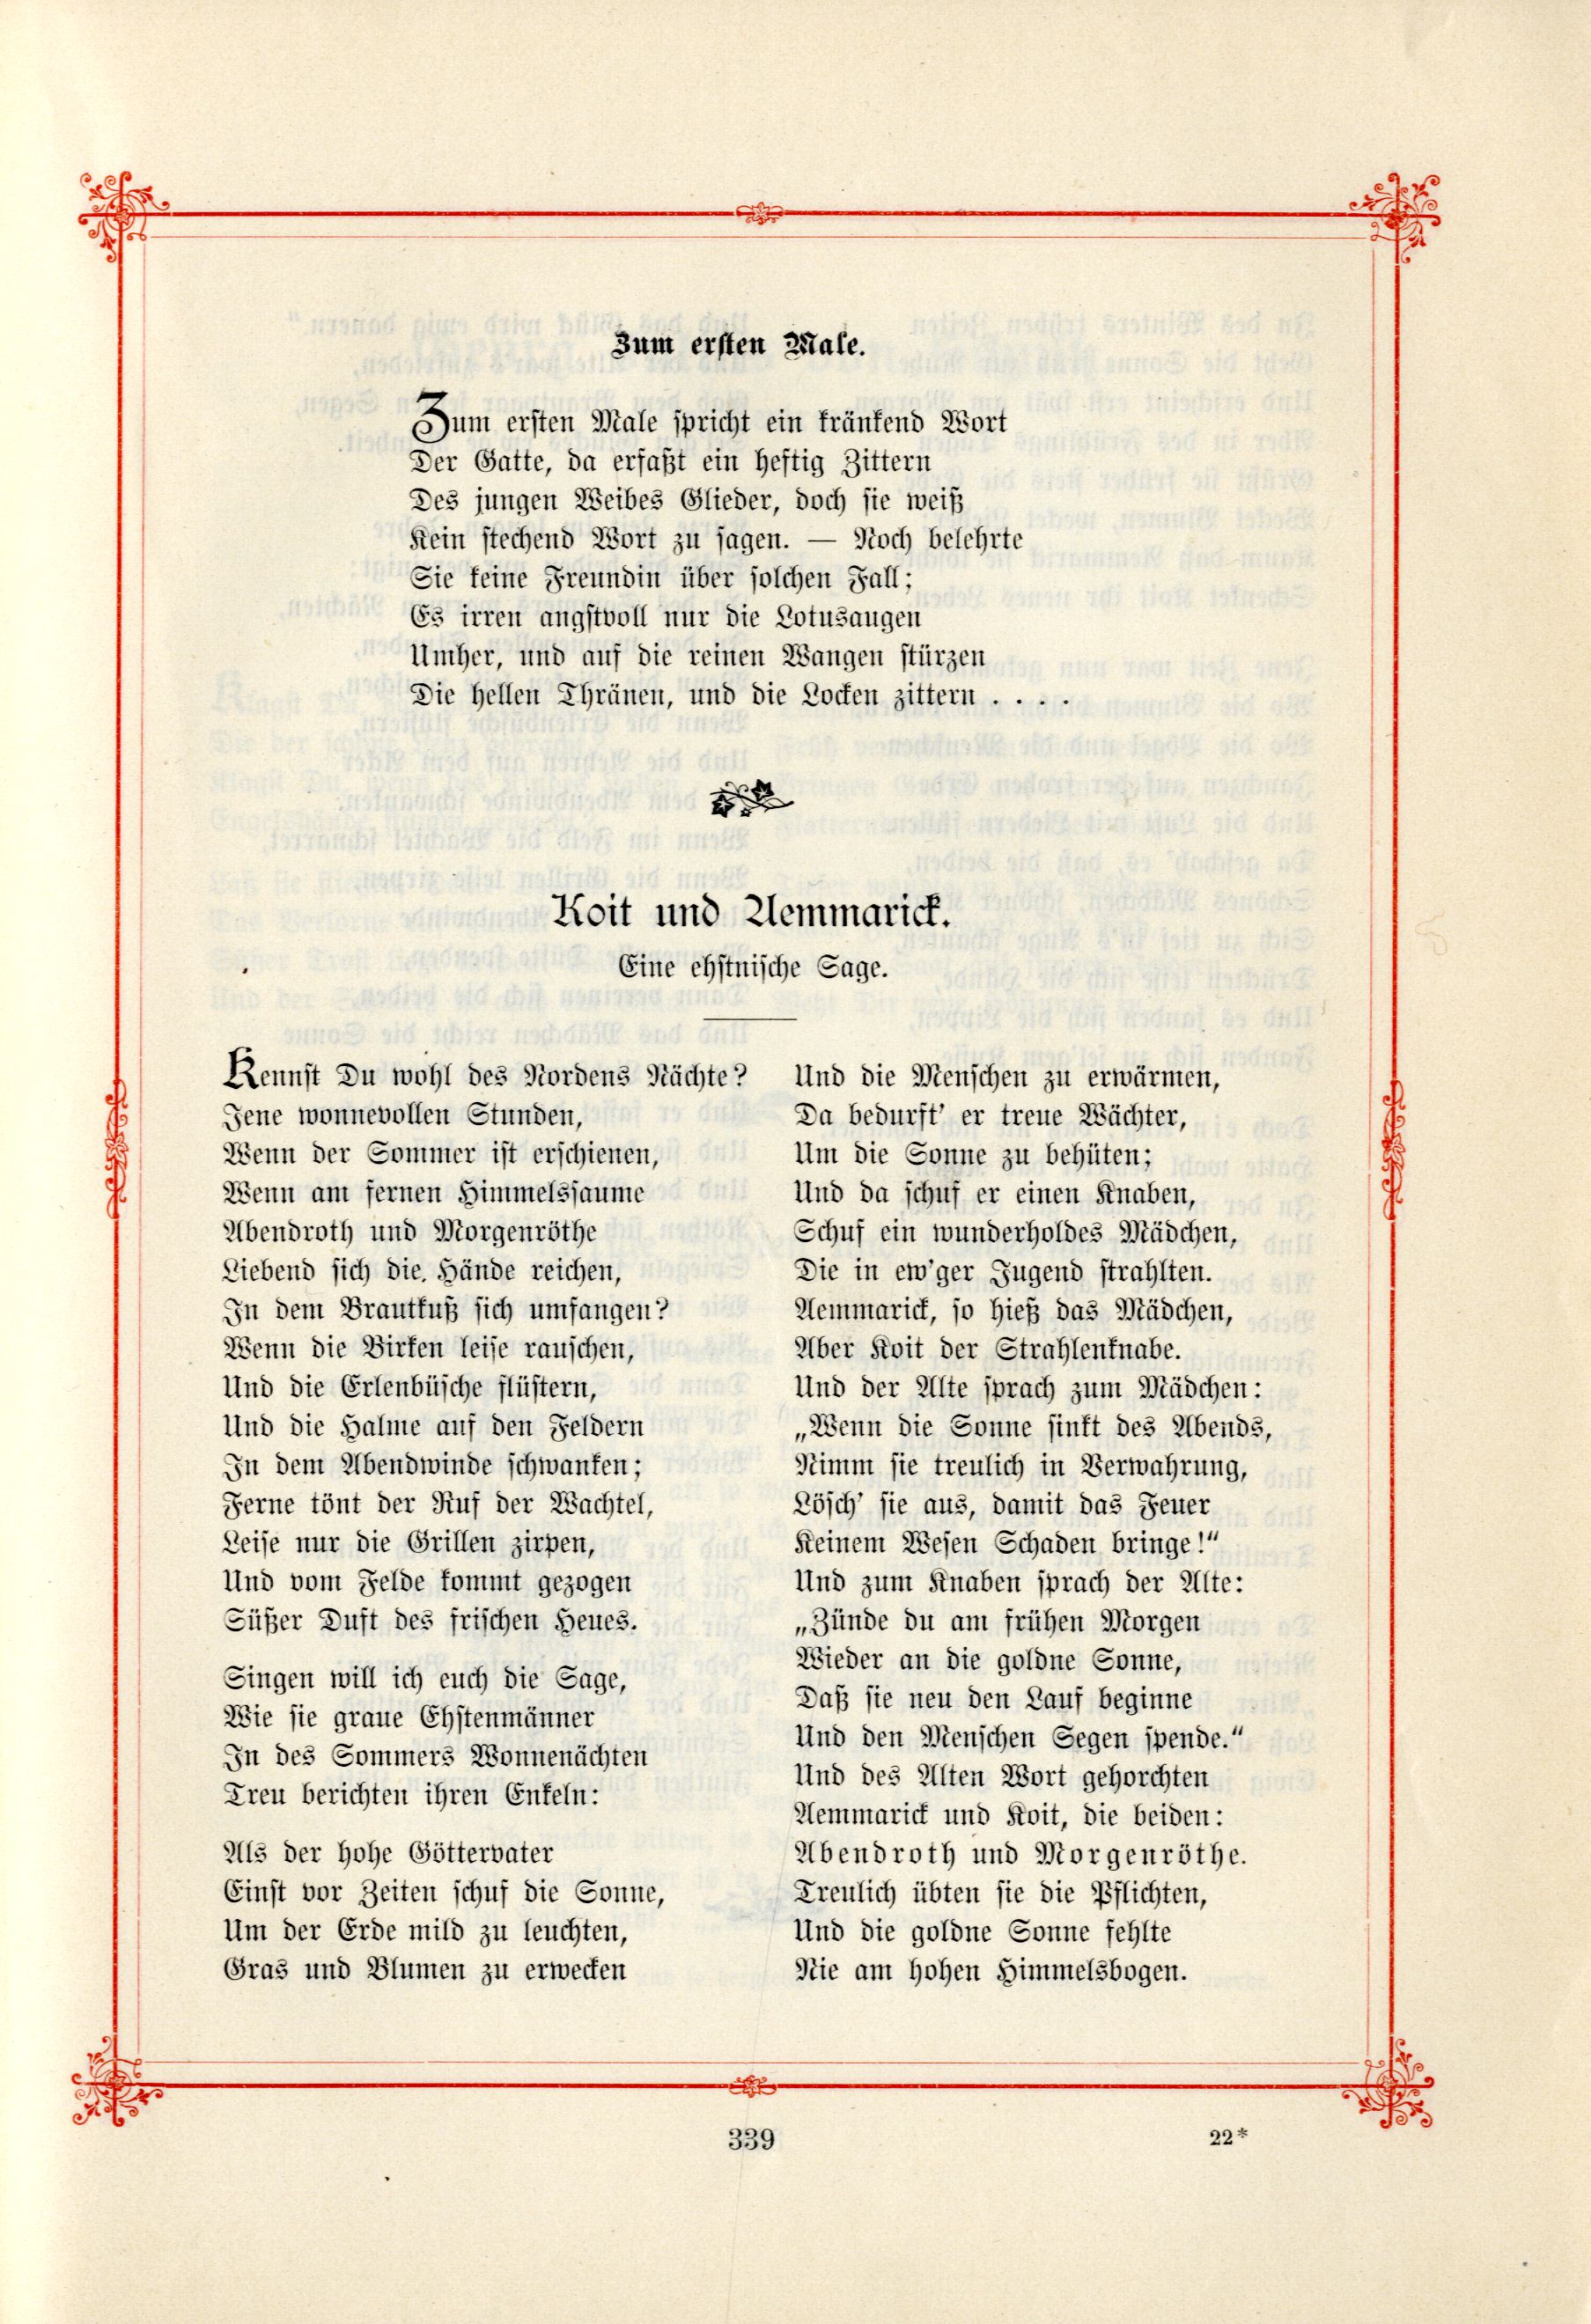 Zum ersten Male (1895) | 1. (339) Основной текст